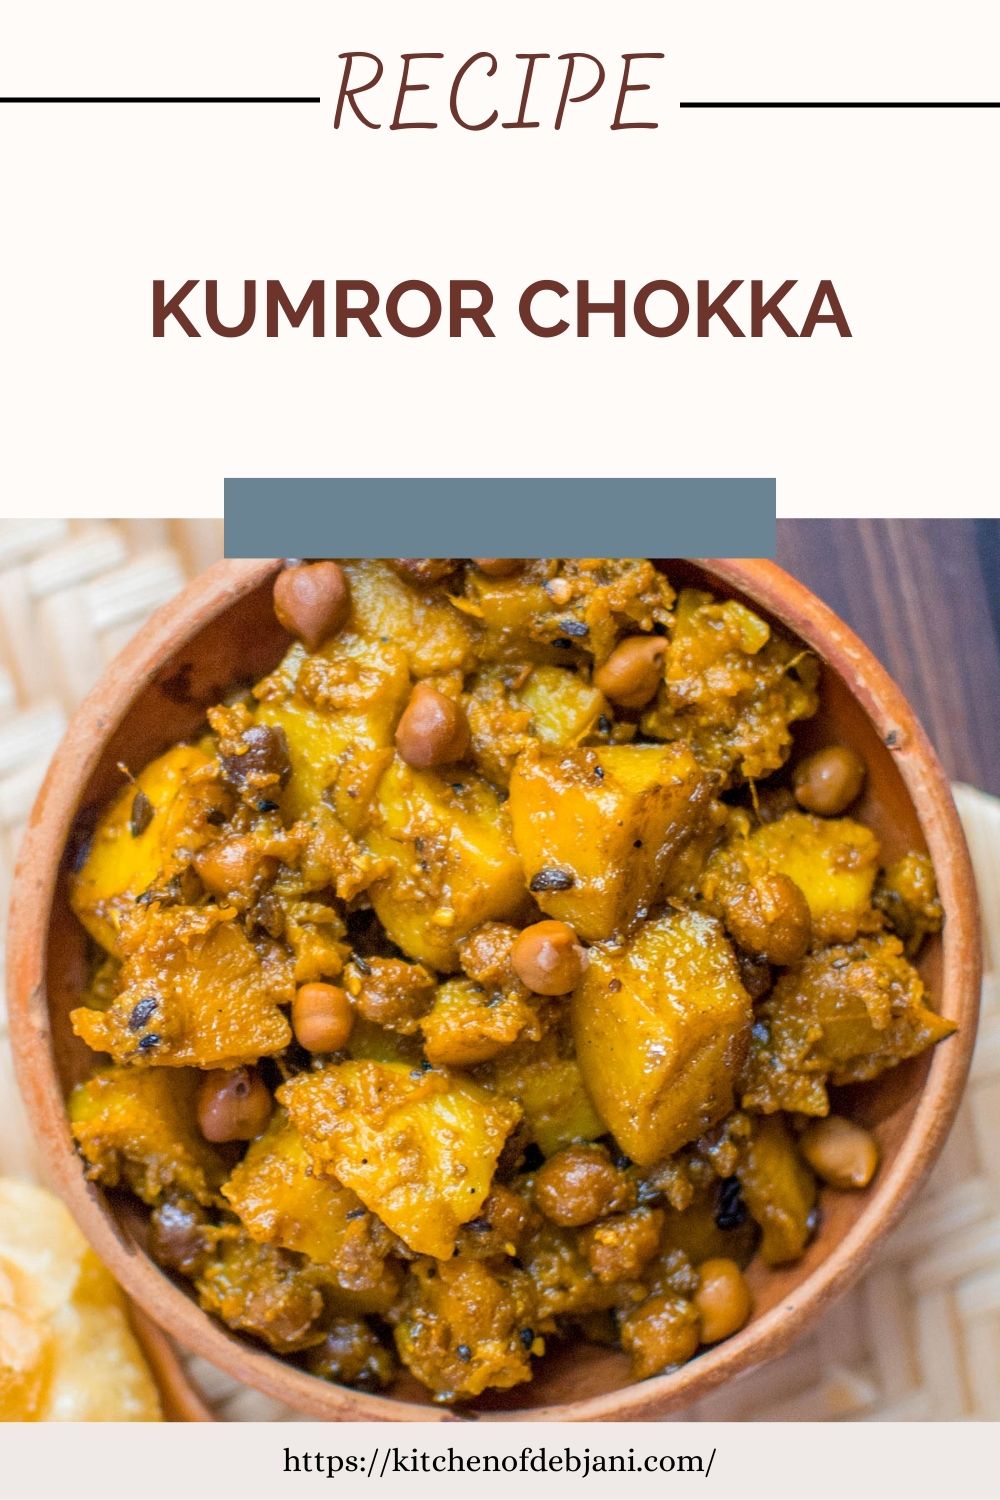 %Kumror Chokka Bengali Recipe debjanir rannaghar Photo Food Pinterest Pin